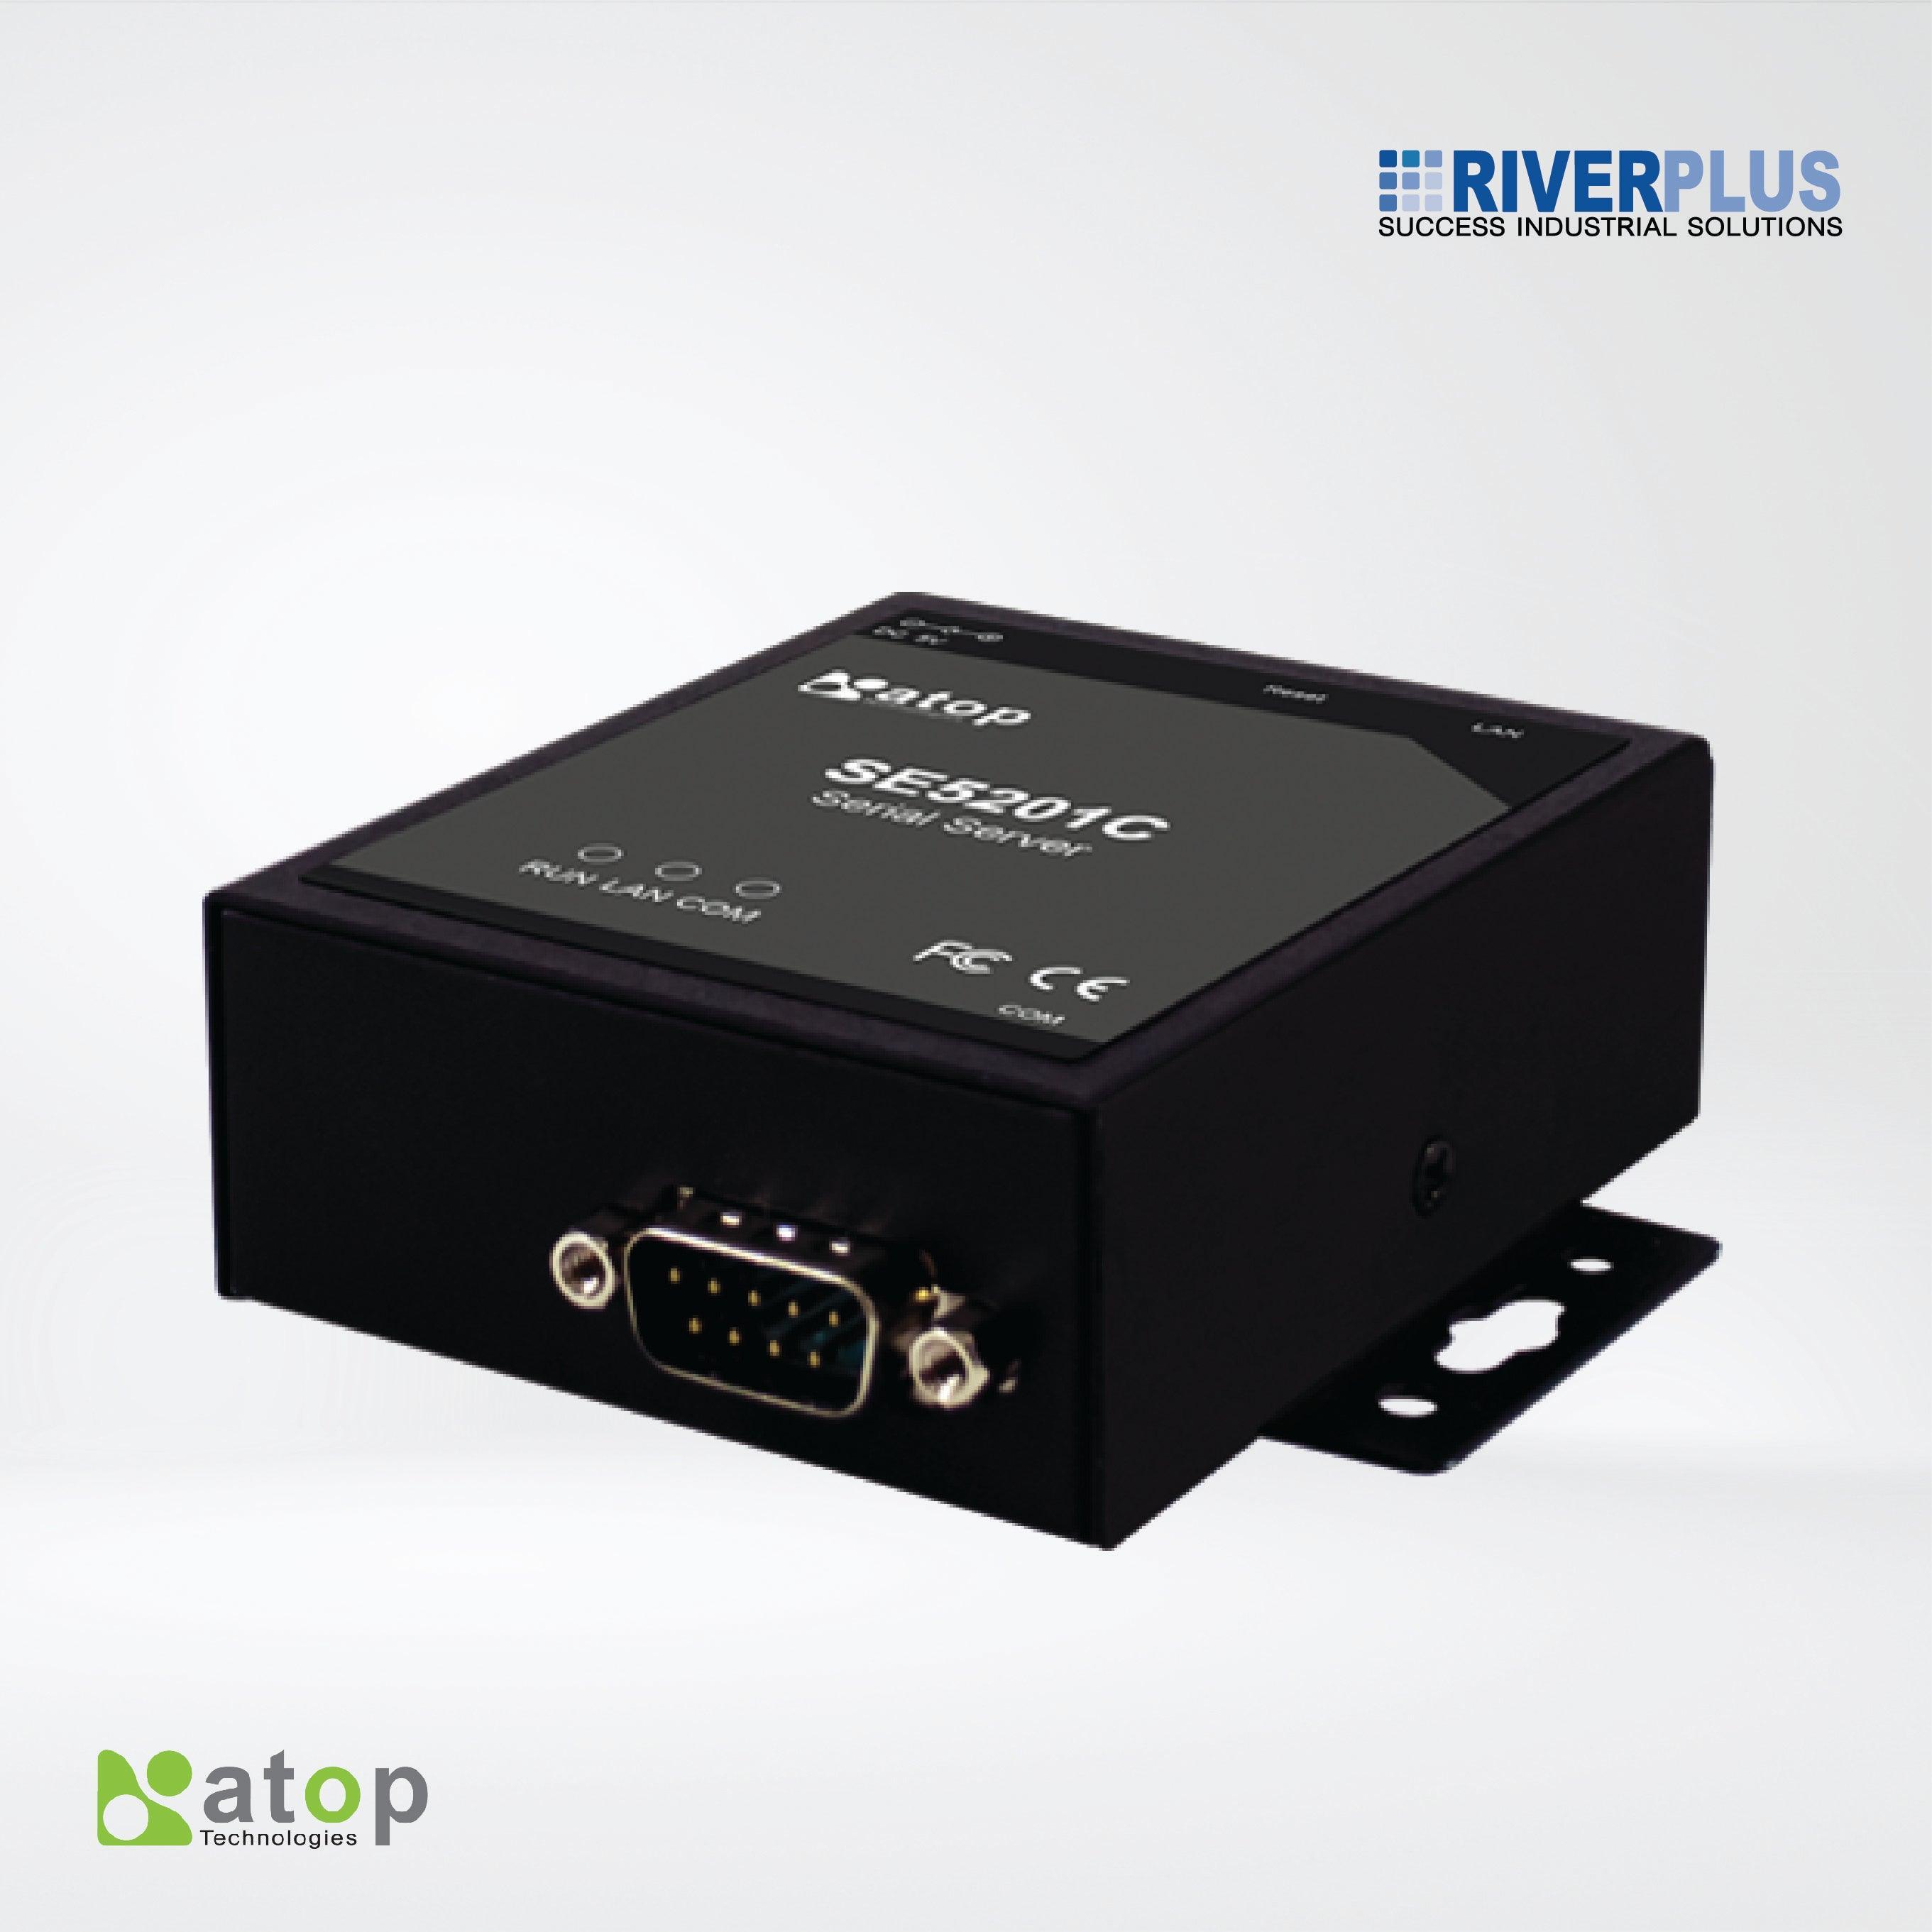 SE5201C-TB Semi-Industrial Serial Device Server - Riverplus